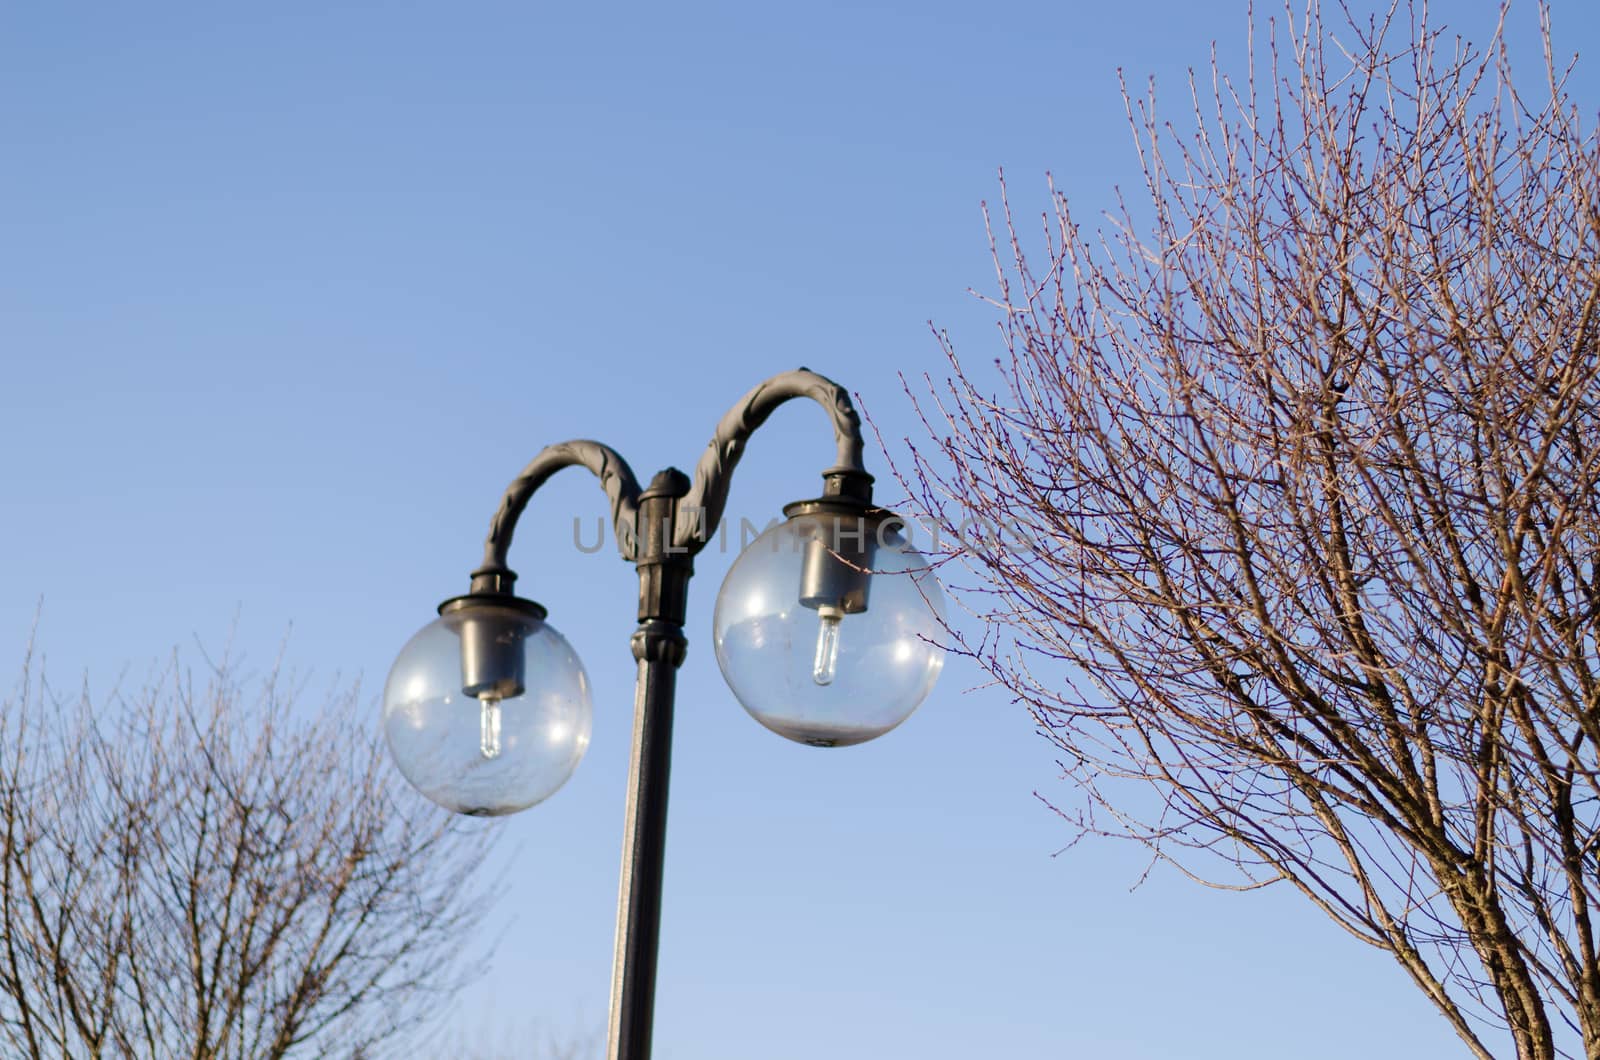 glass street lamp on blue sky background by sauletas